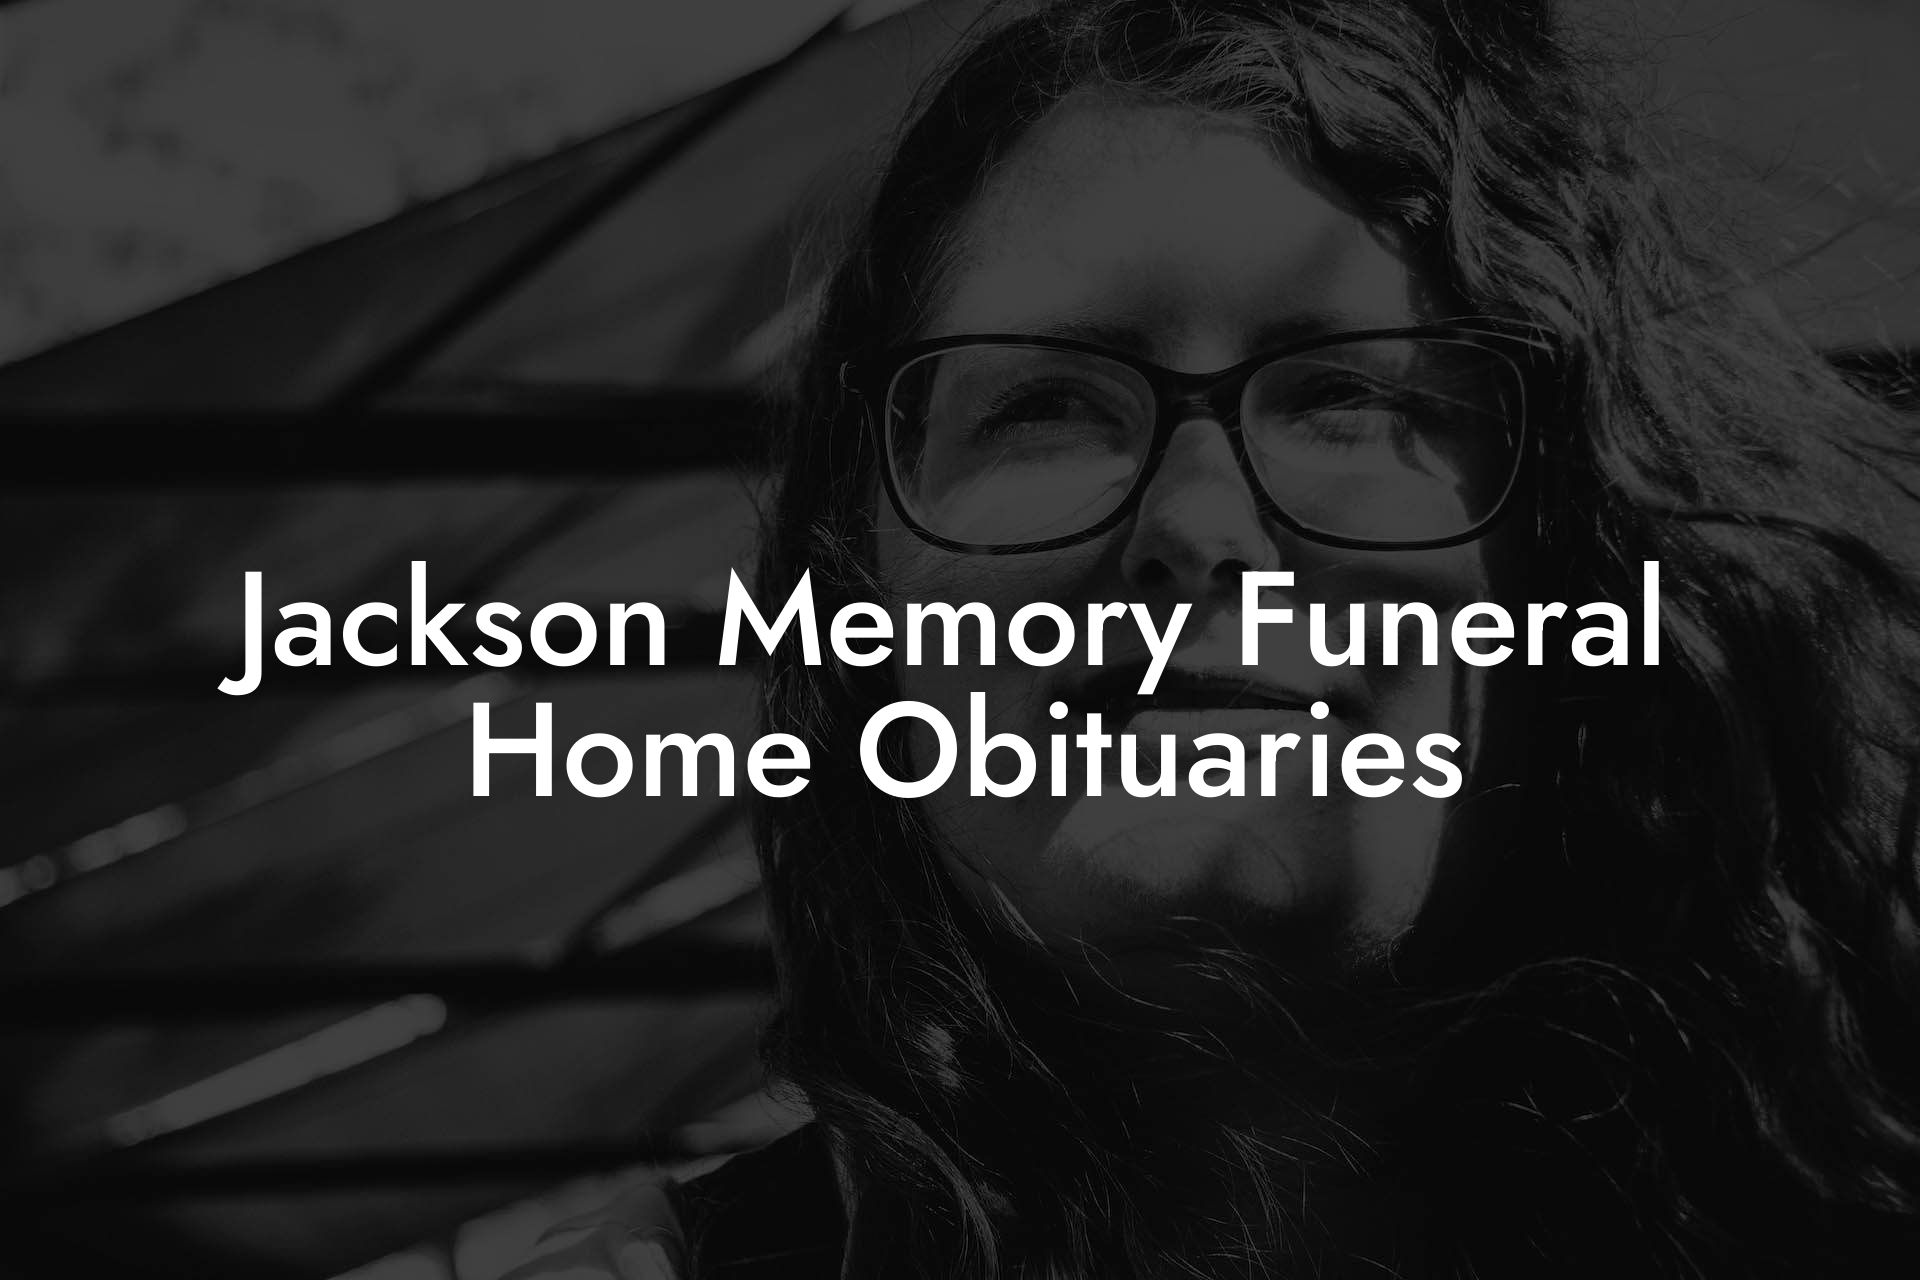 Jackson Memory Funeral Home Obituaries